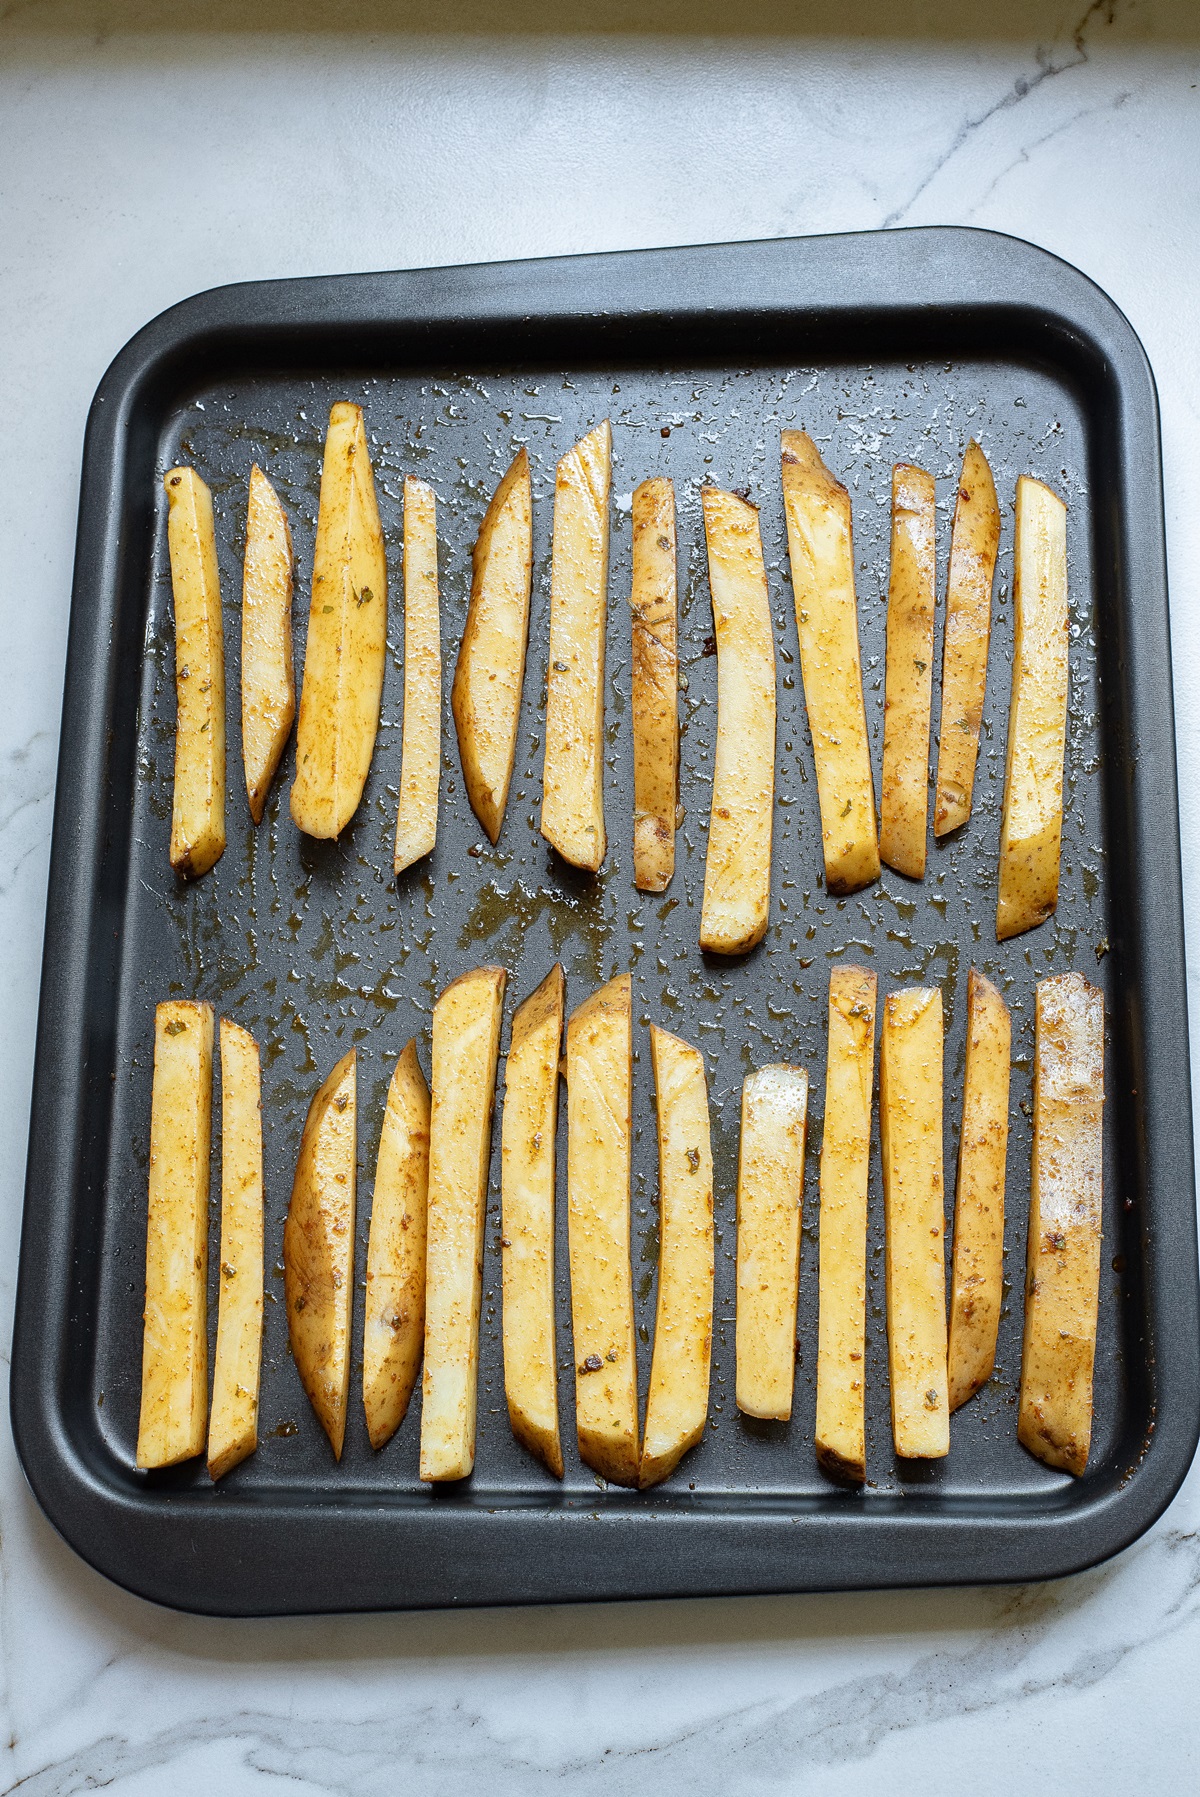 Sliced potatoes on a baking tray.